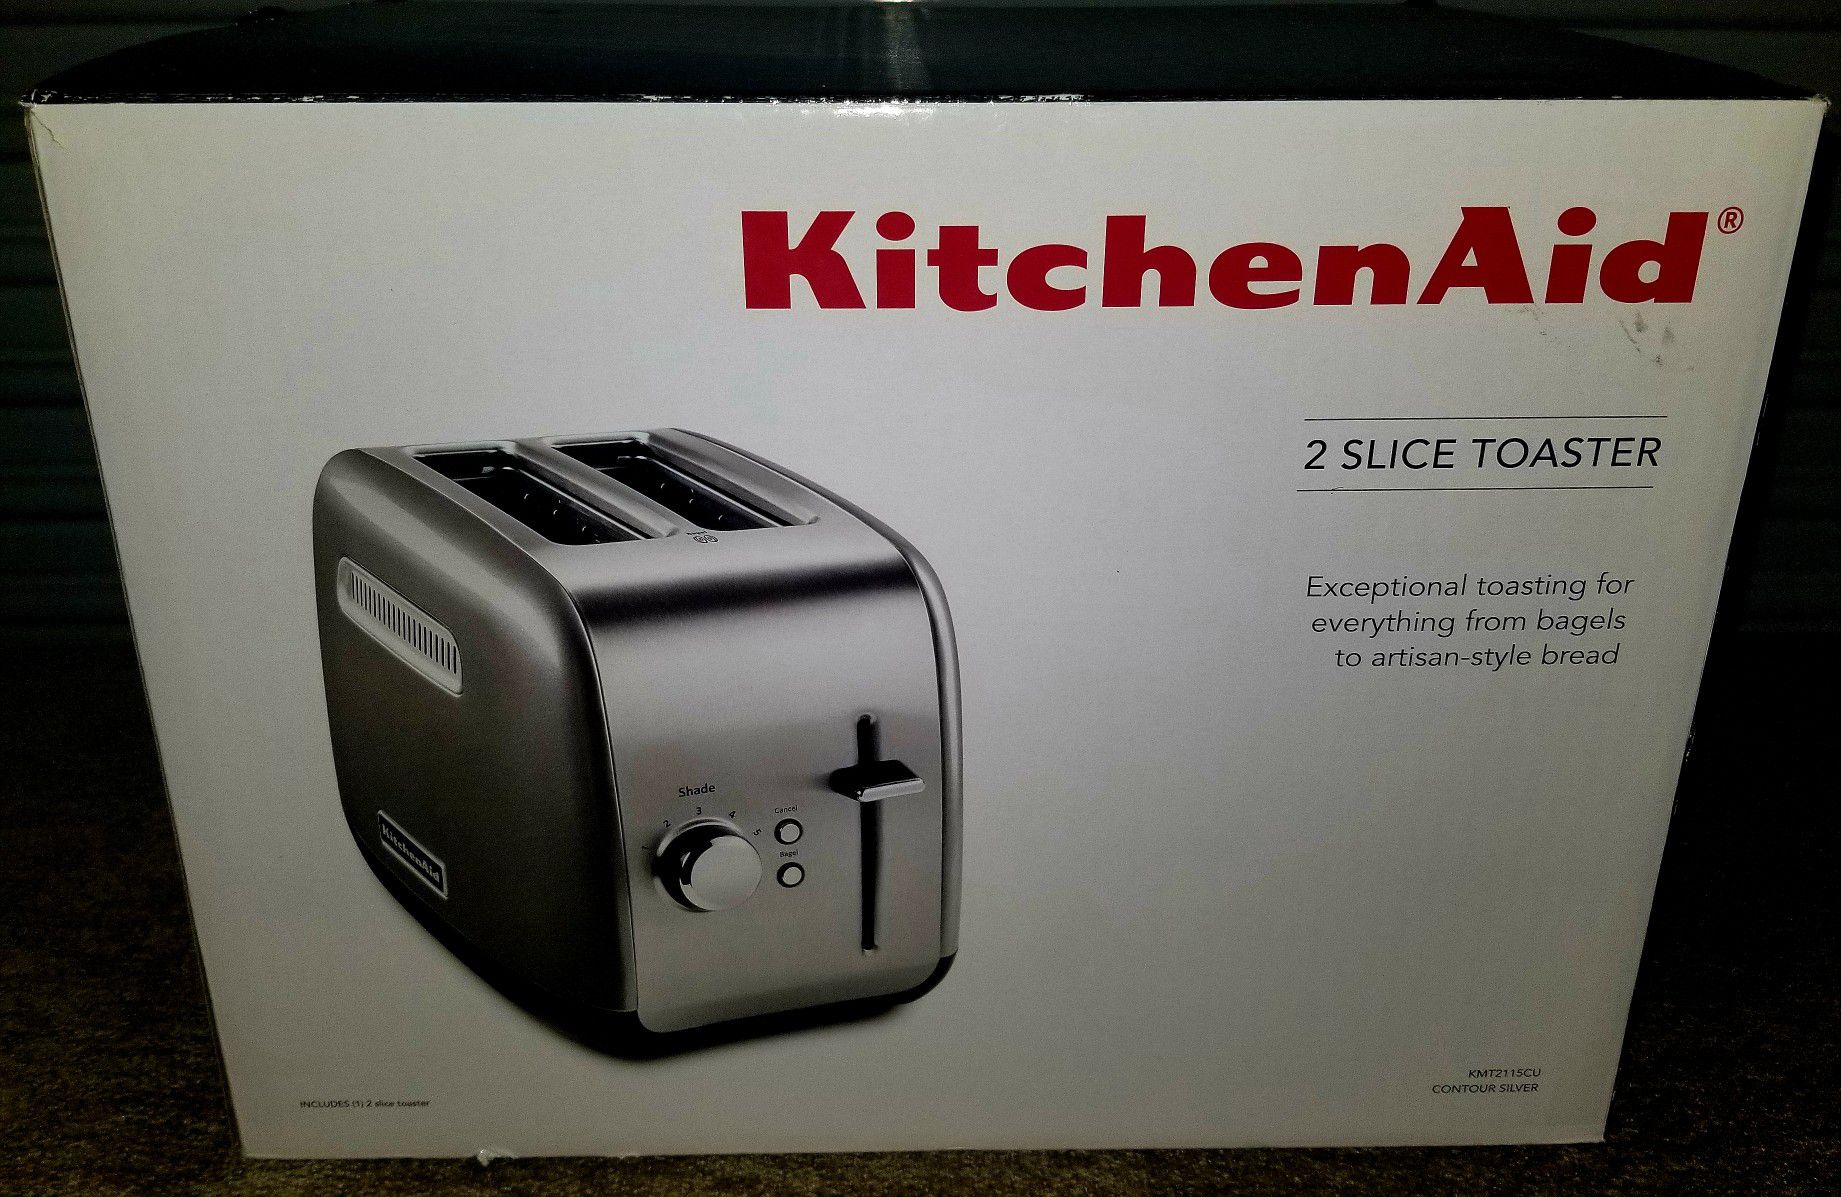 KitchenAid * 2 Slice Toaster * BRAND NEW IN BOX